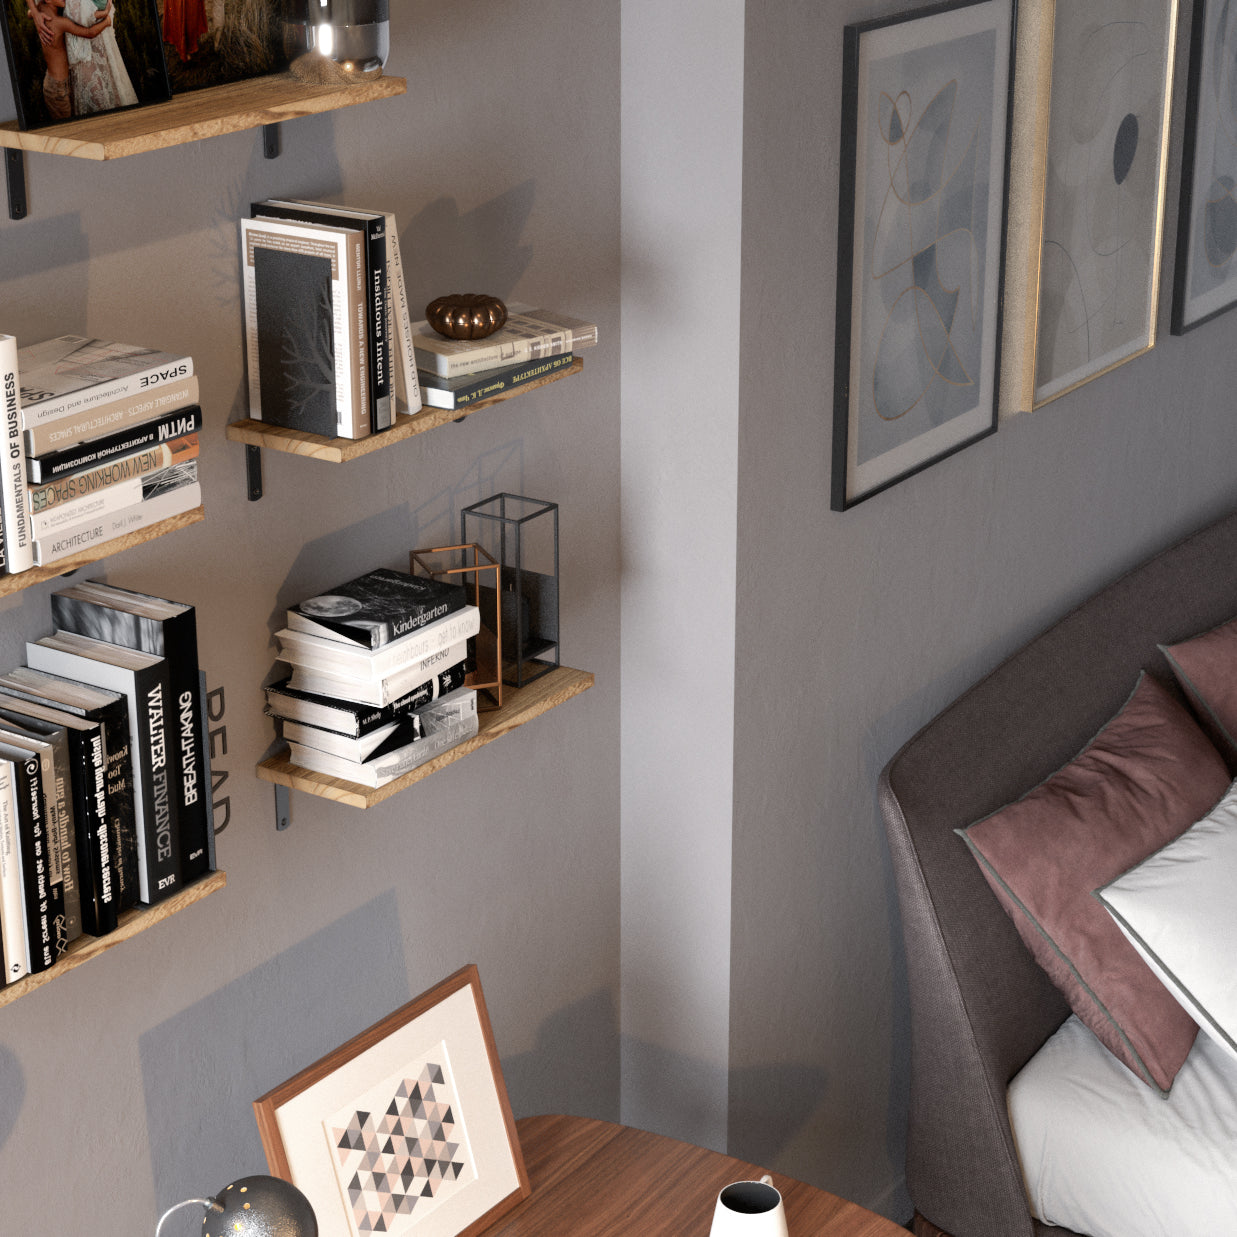 PALMA 17" Rustic Floating Shelves, Wall Bookshelf for Bedroom Decor – Set of 5 – Natural Burned - Wallniture